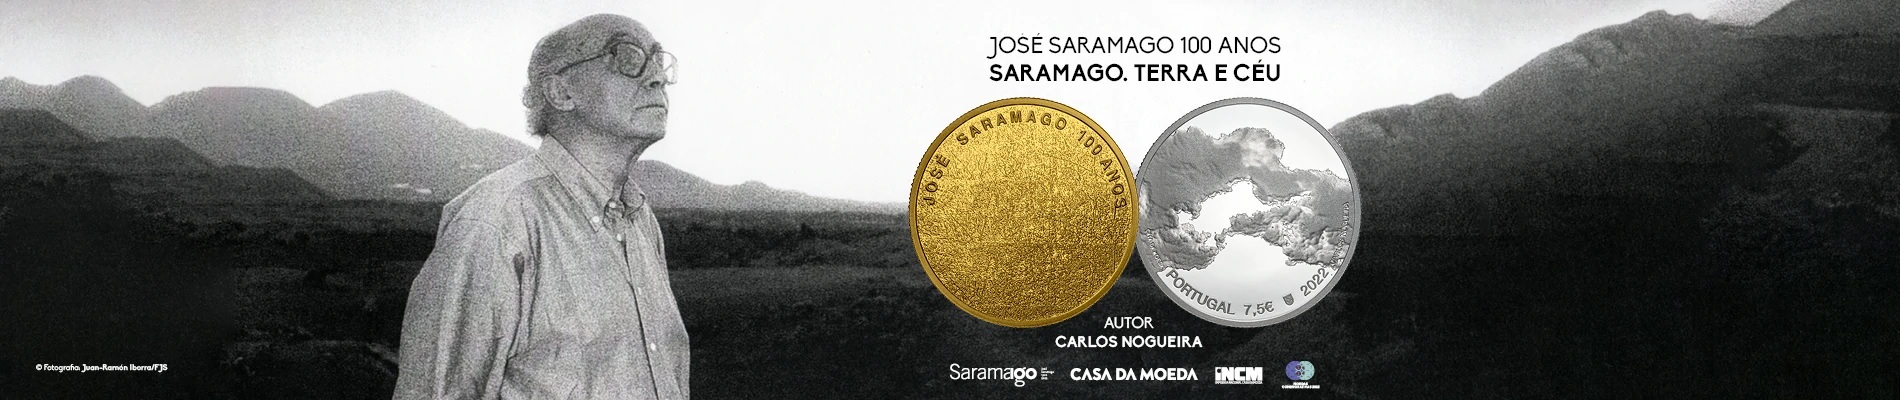 INCM José Saramago 100 Years (shop illustration) (zoom)